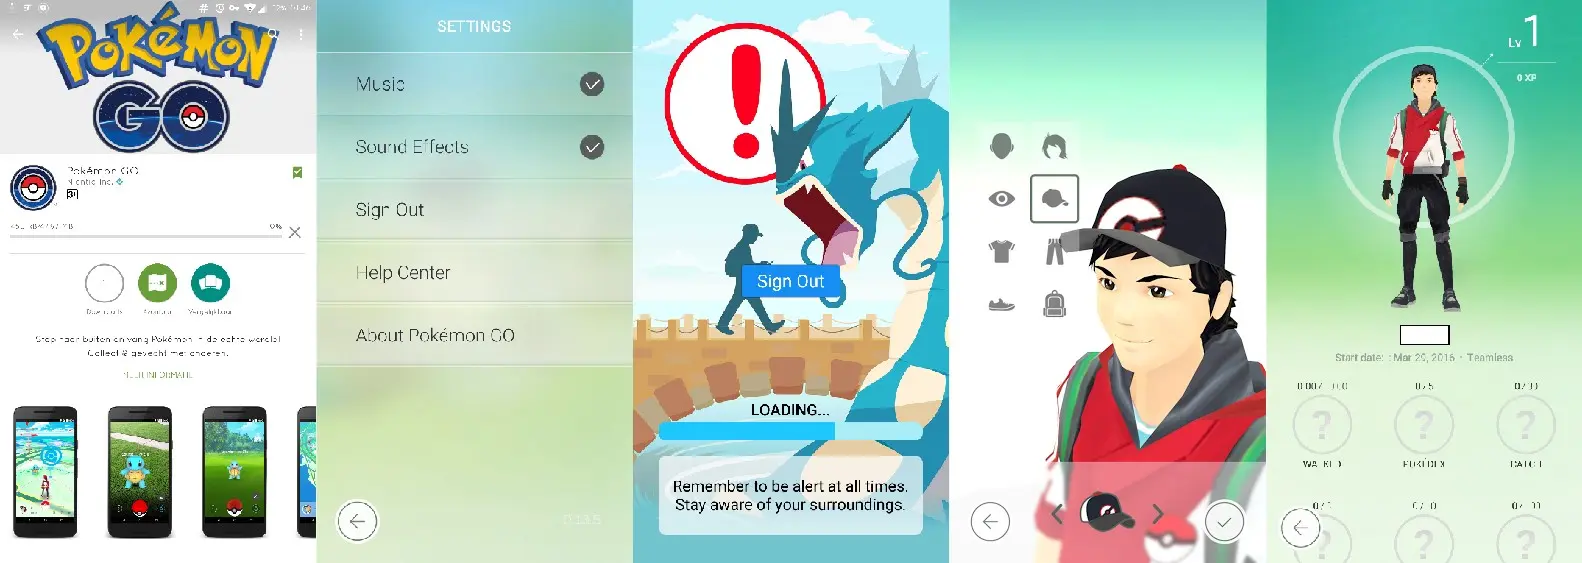 pokemon_go_screenshot_collage